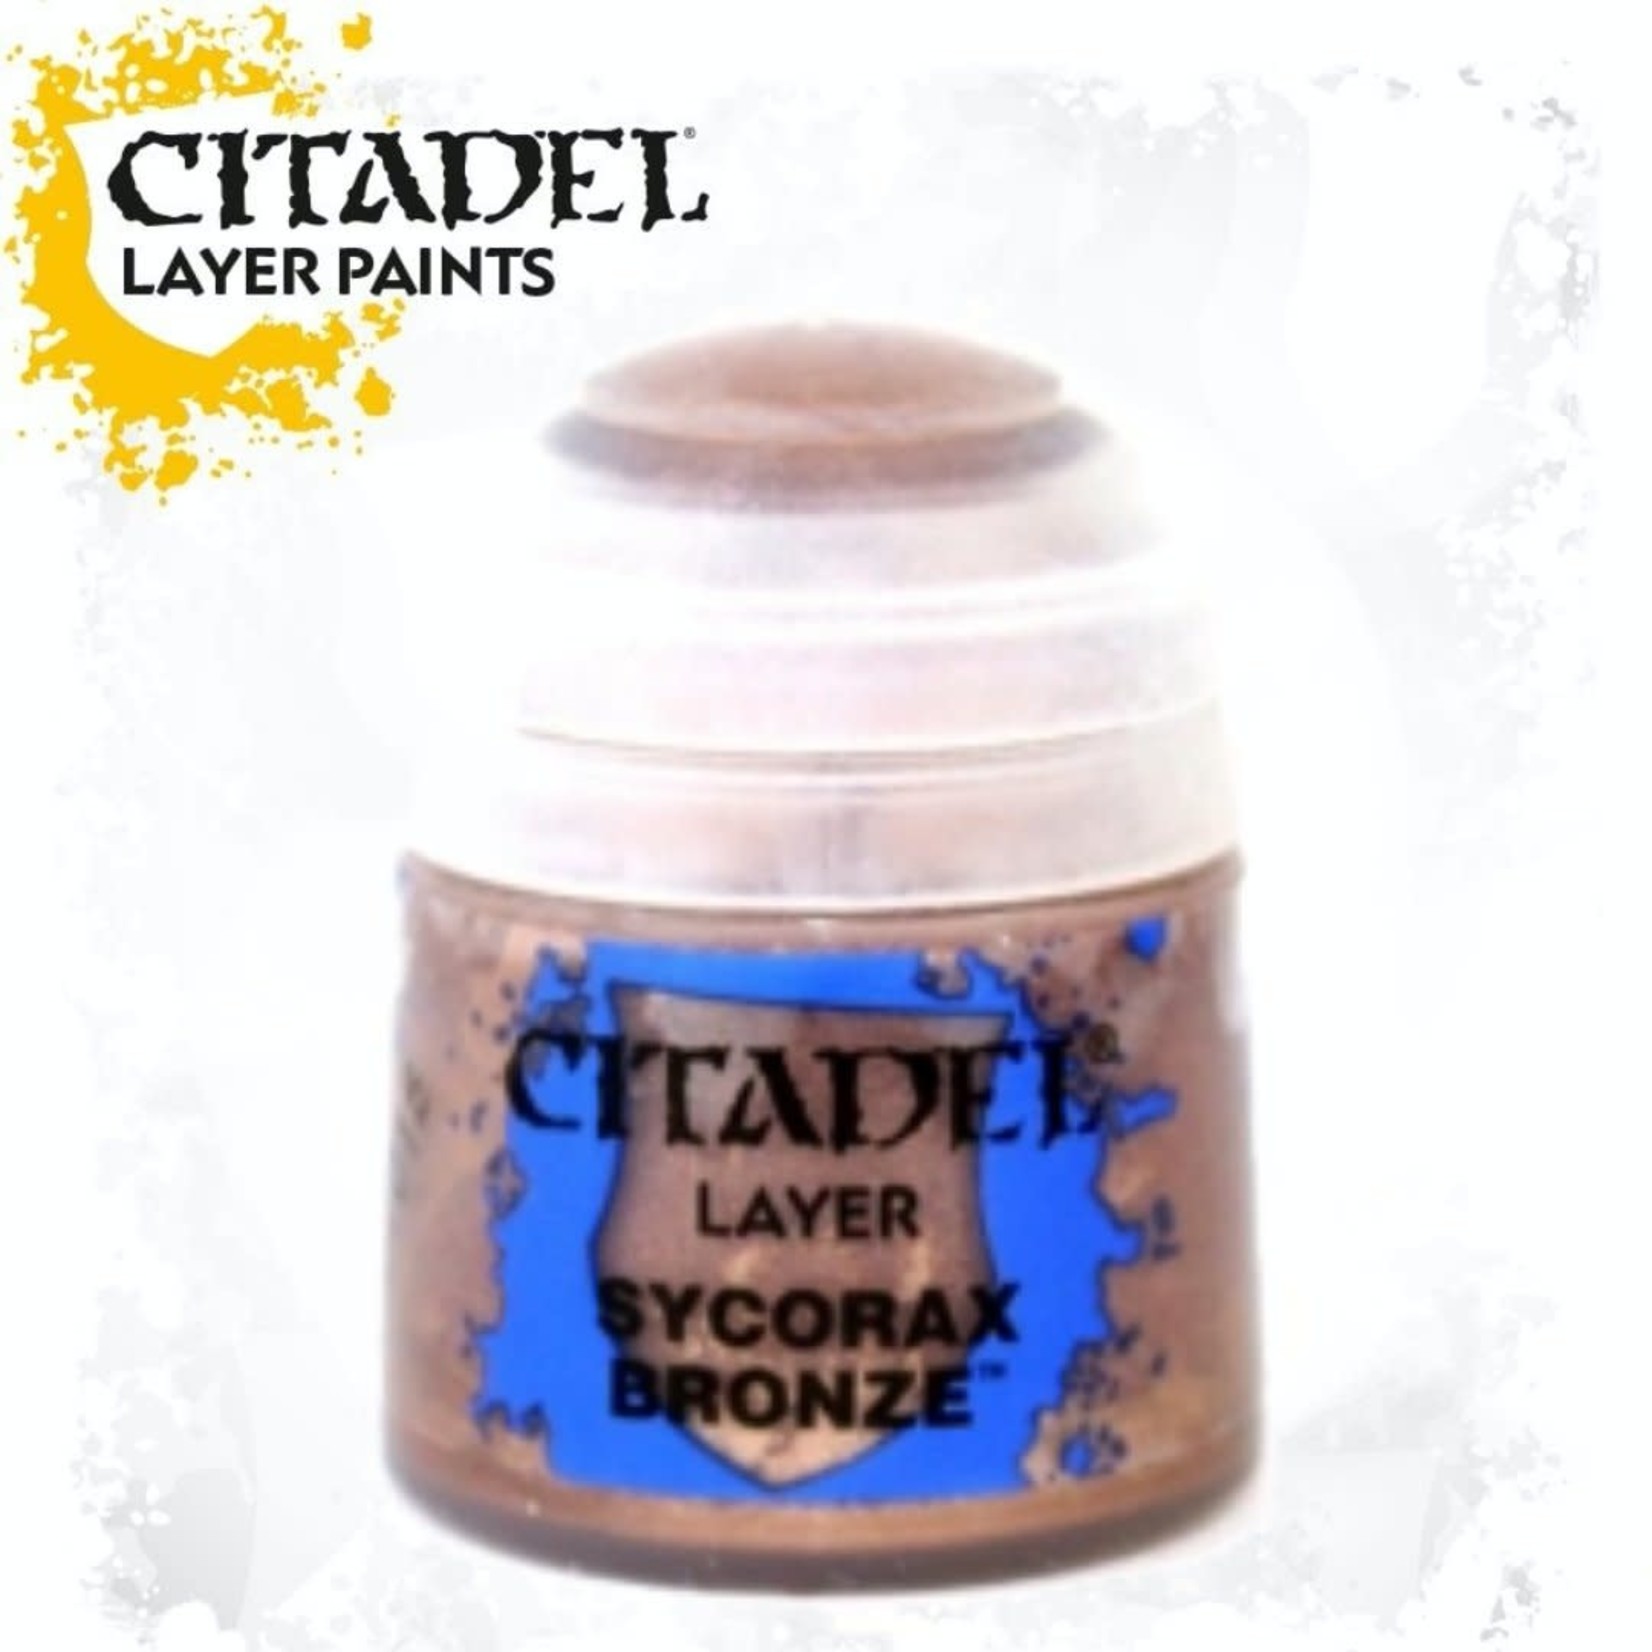 Citadel Citadel Paint - Layer: Sycorax Bronze